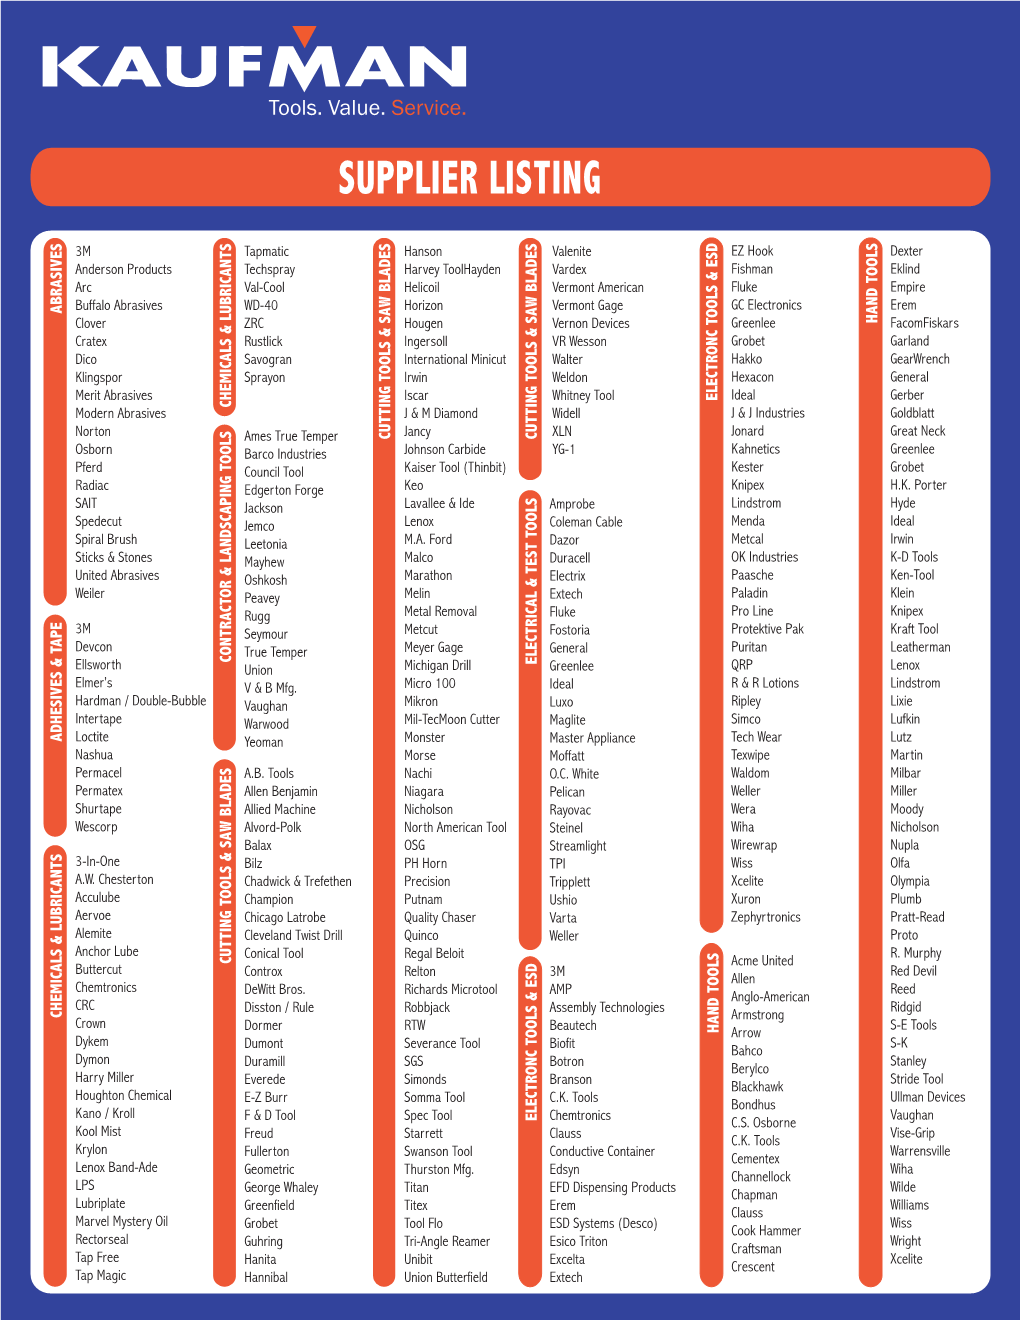 Supplier Listing